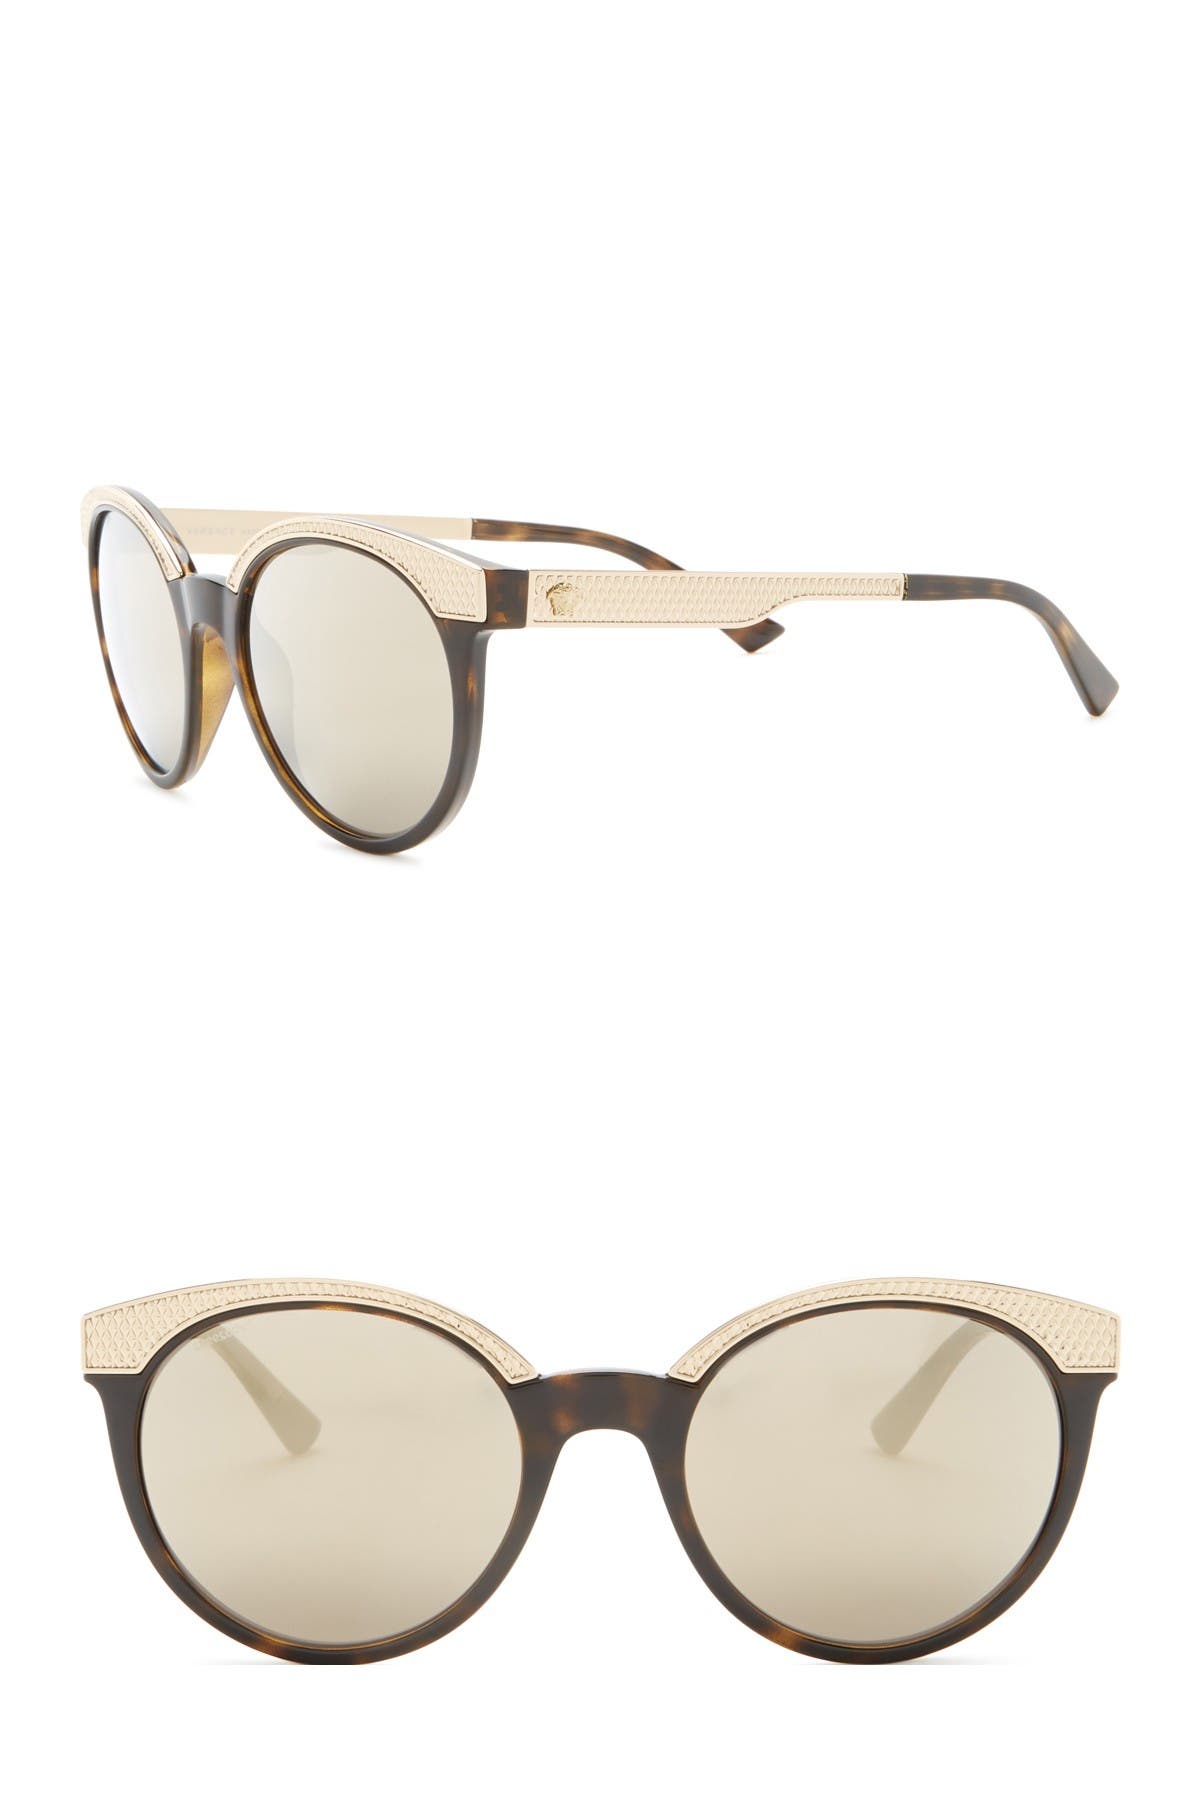 versace 53mm round sunglasses